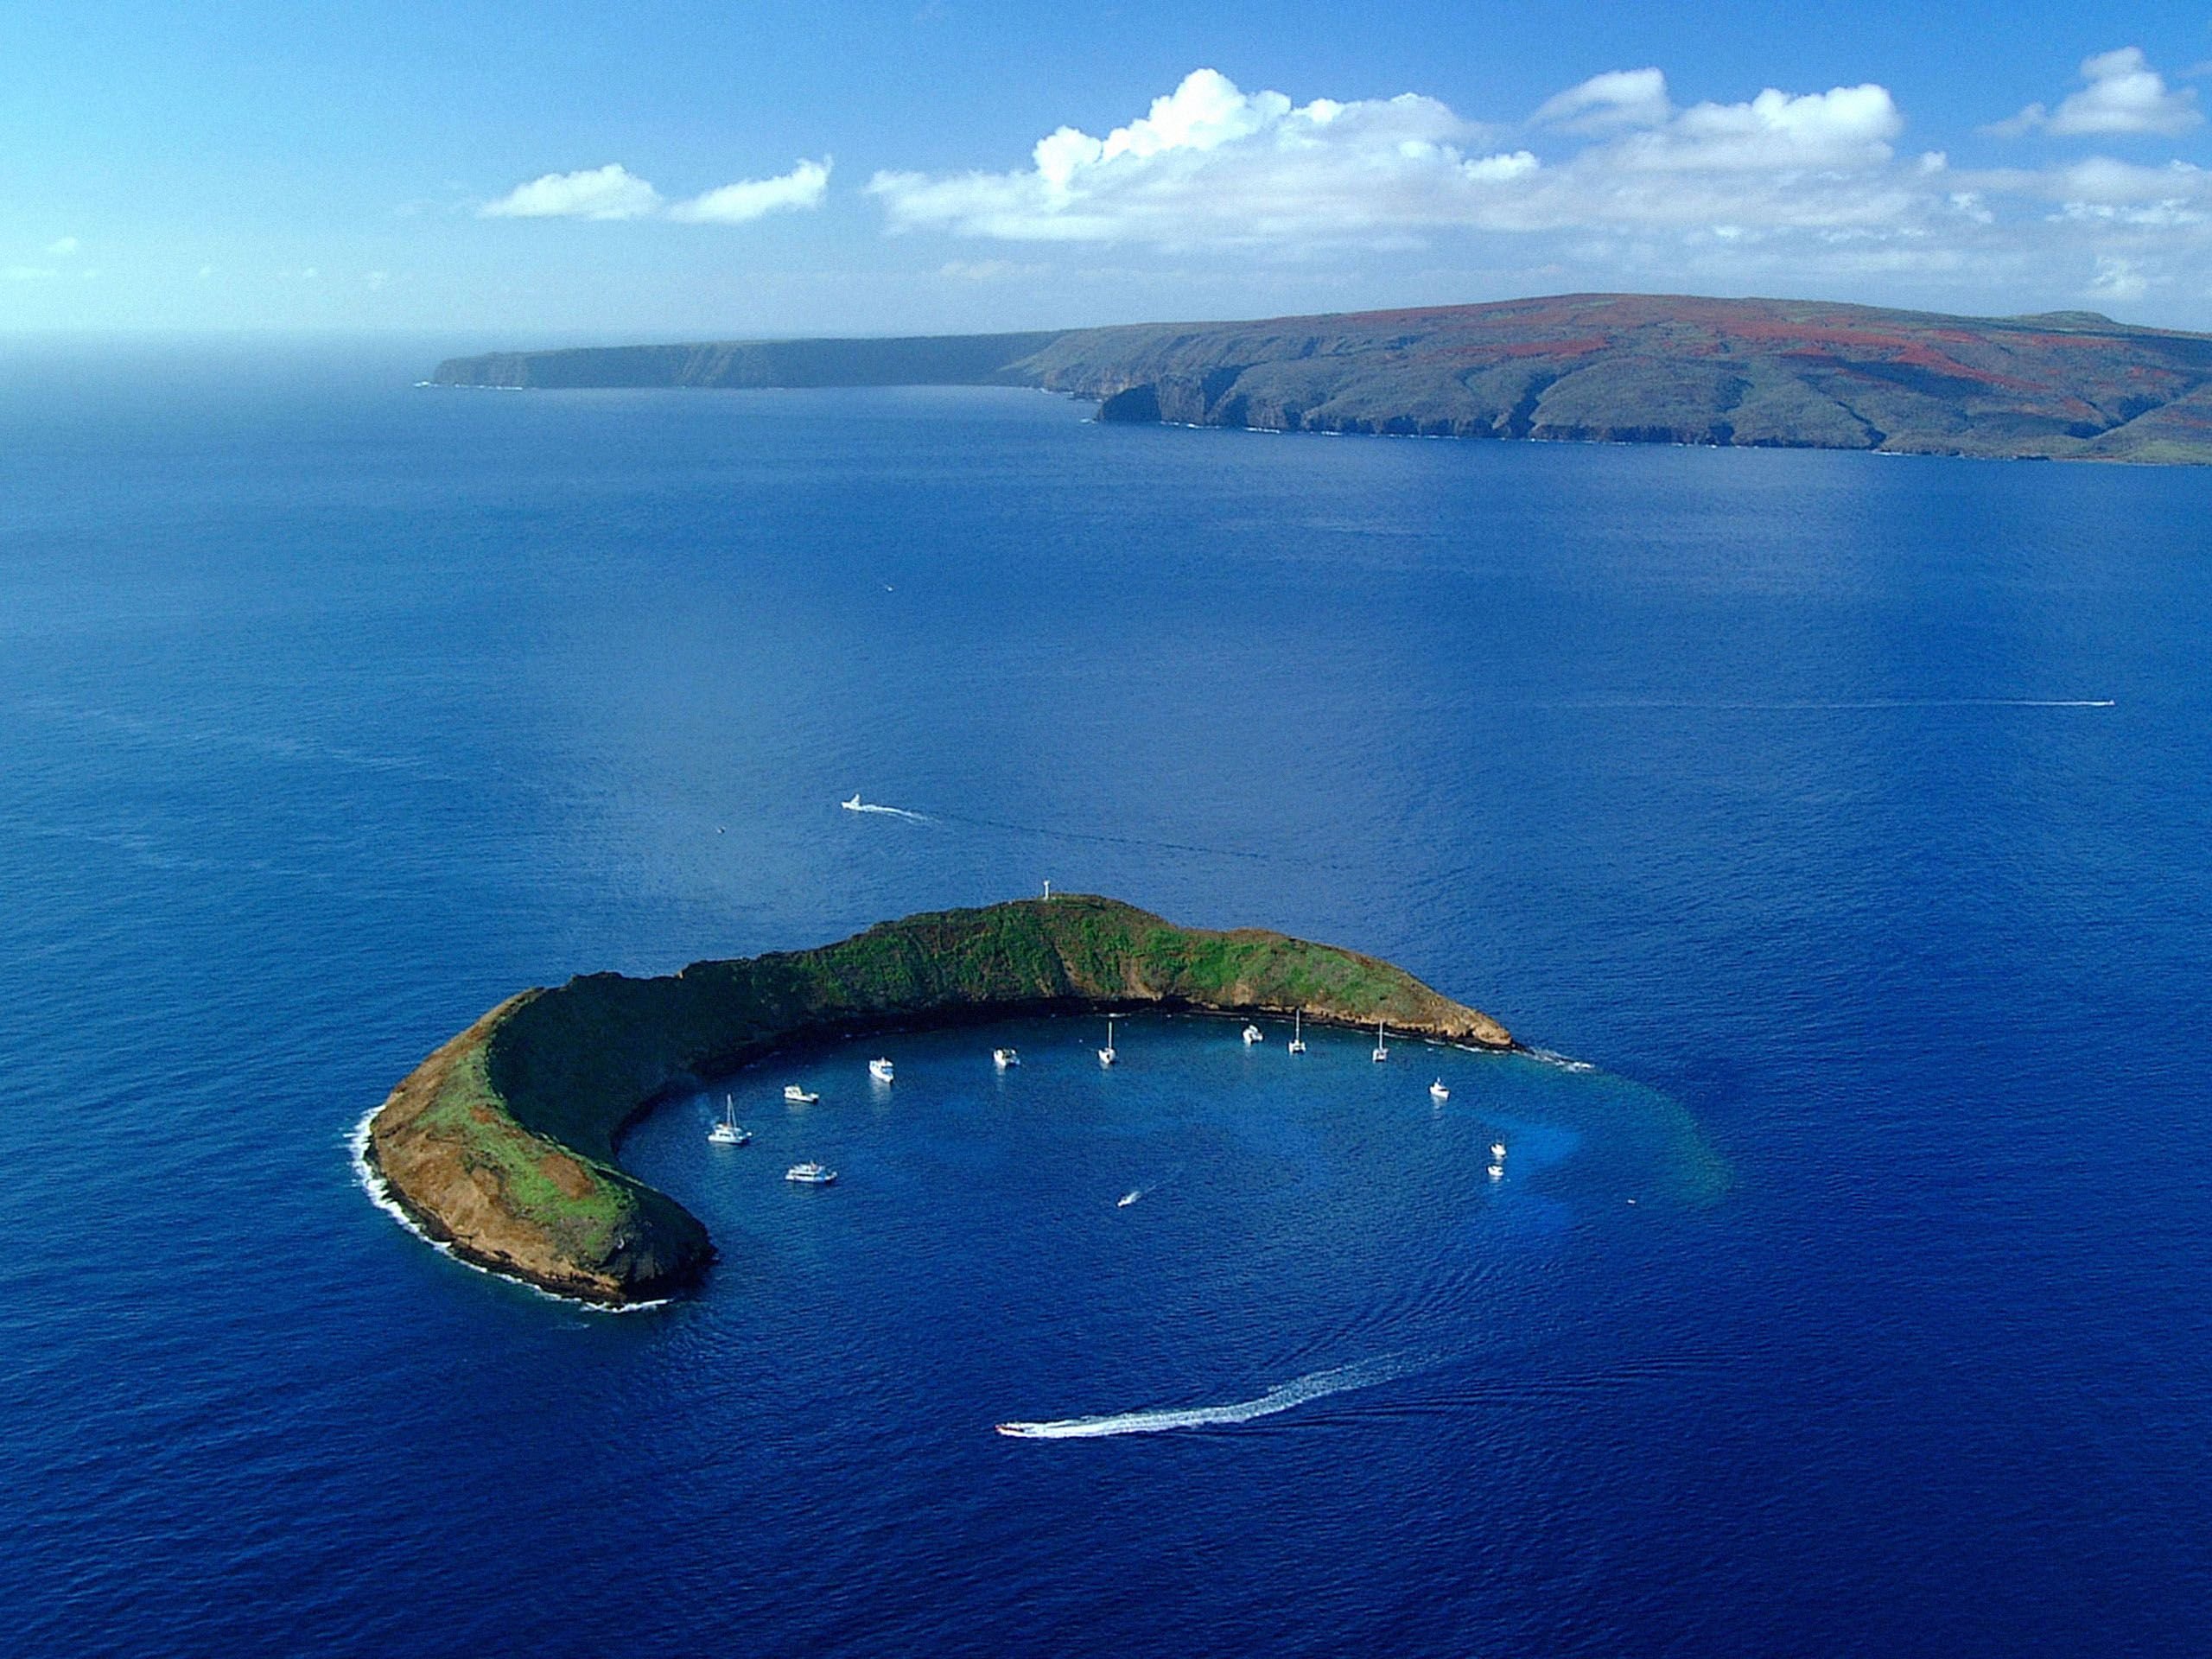 Запишите острова тихого океана. Остров Молокини, Гавайи. Кратер Молокини, Гавайи. Остров Мауи Гавайи. Гавайский архипелаг остров Мауи.